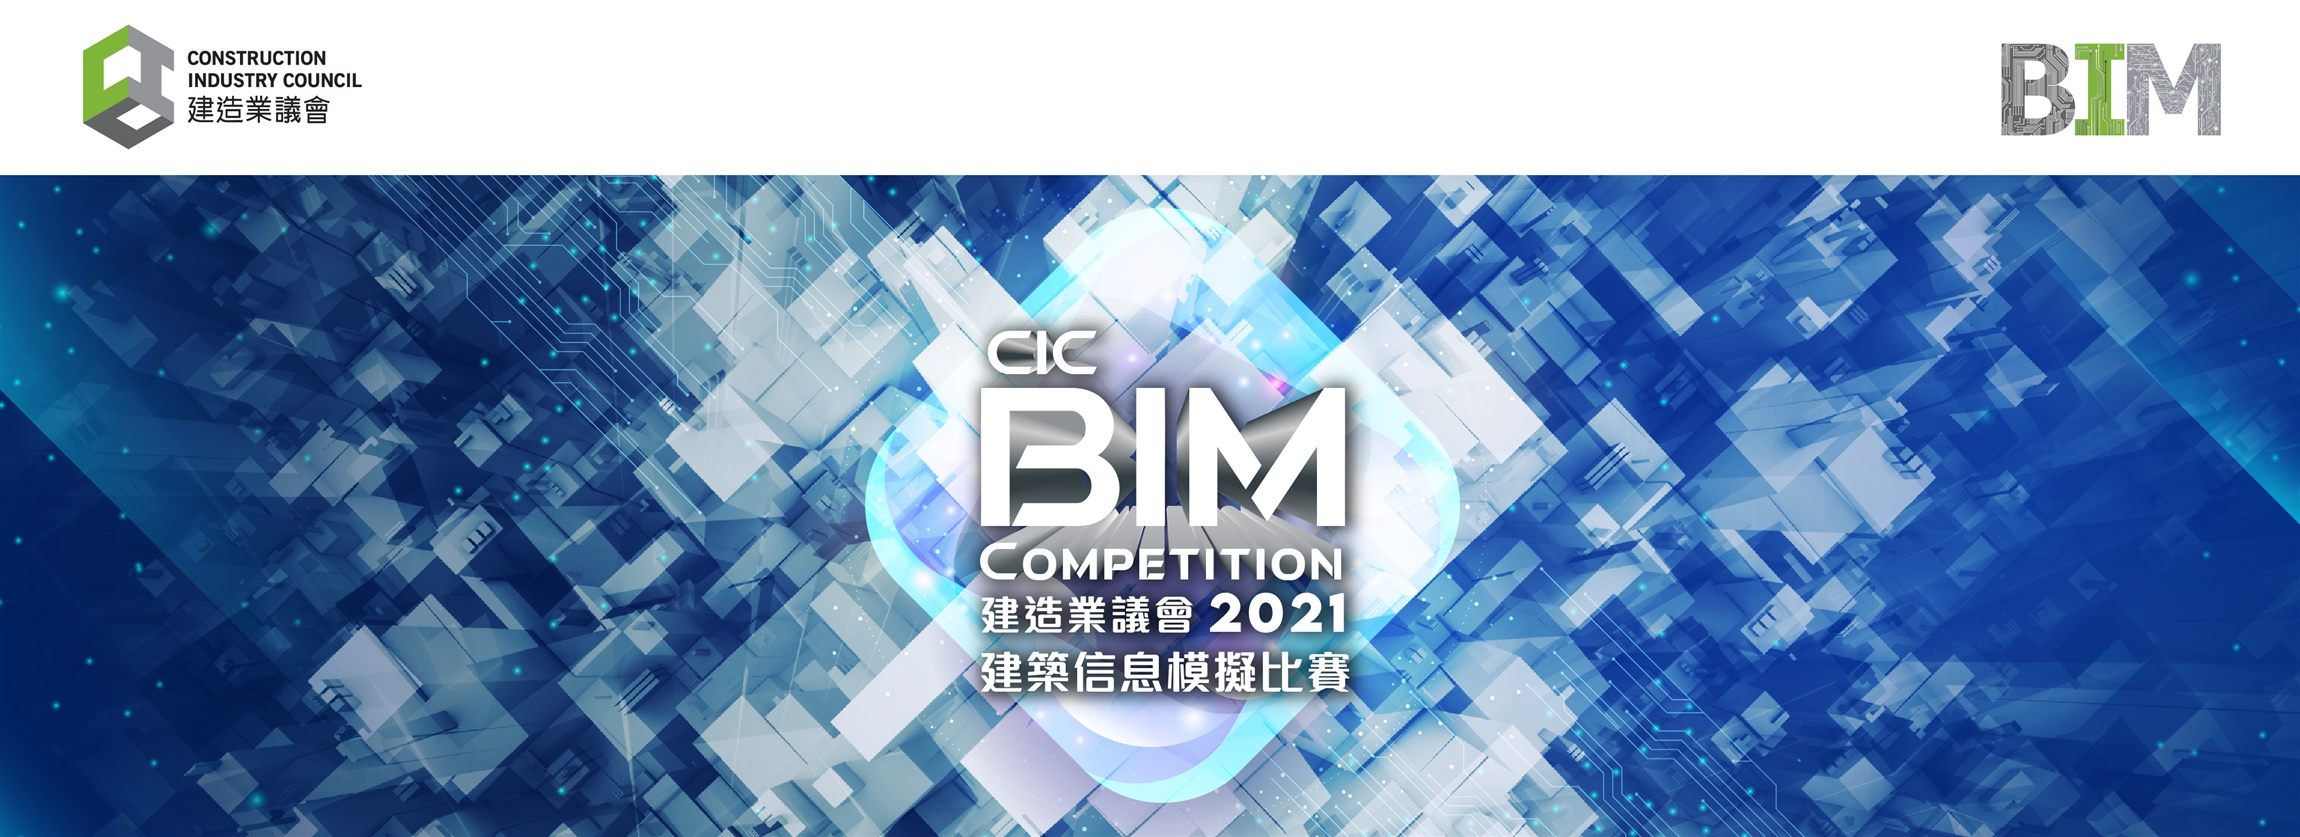 Self Photos / Files - BIM Competition_Web Banner 2021